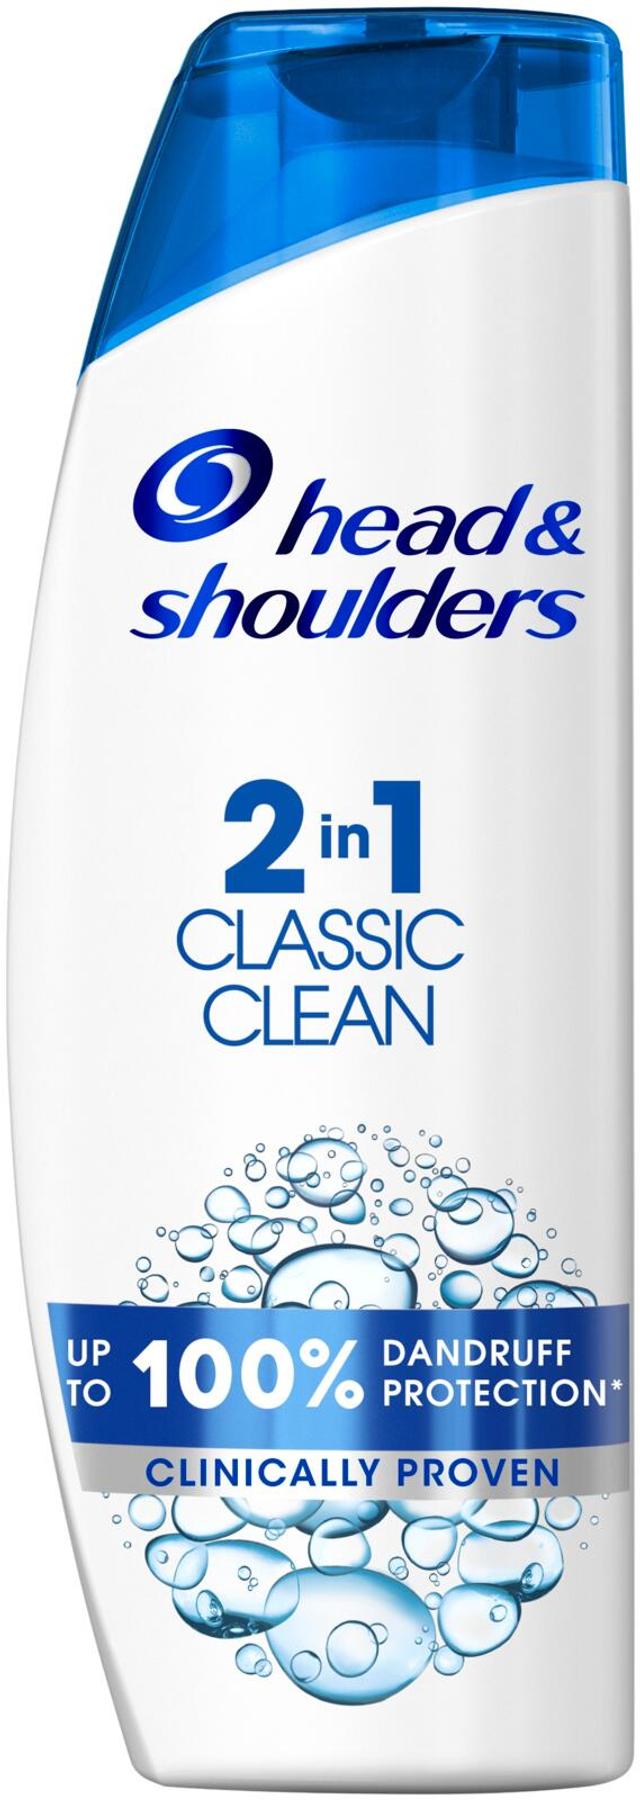 head&shoulders 2in1 Classic Clean 225ml shampoo